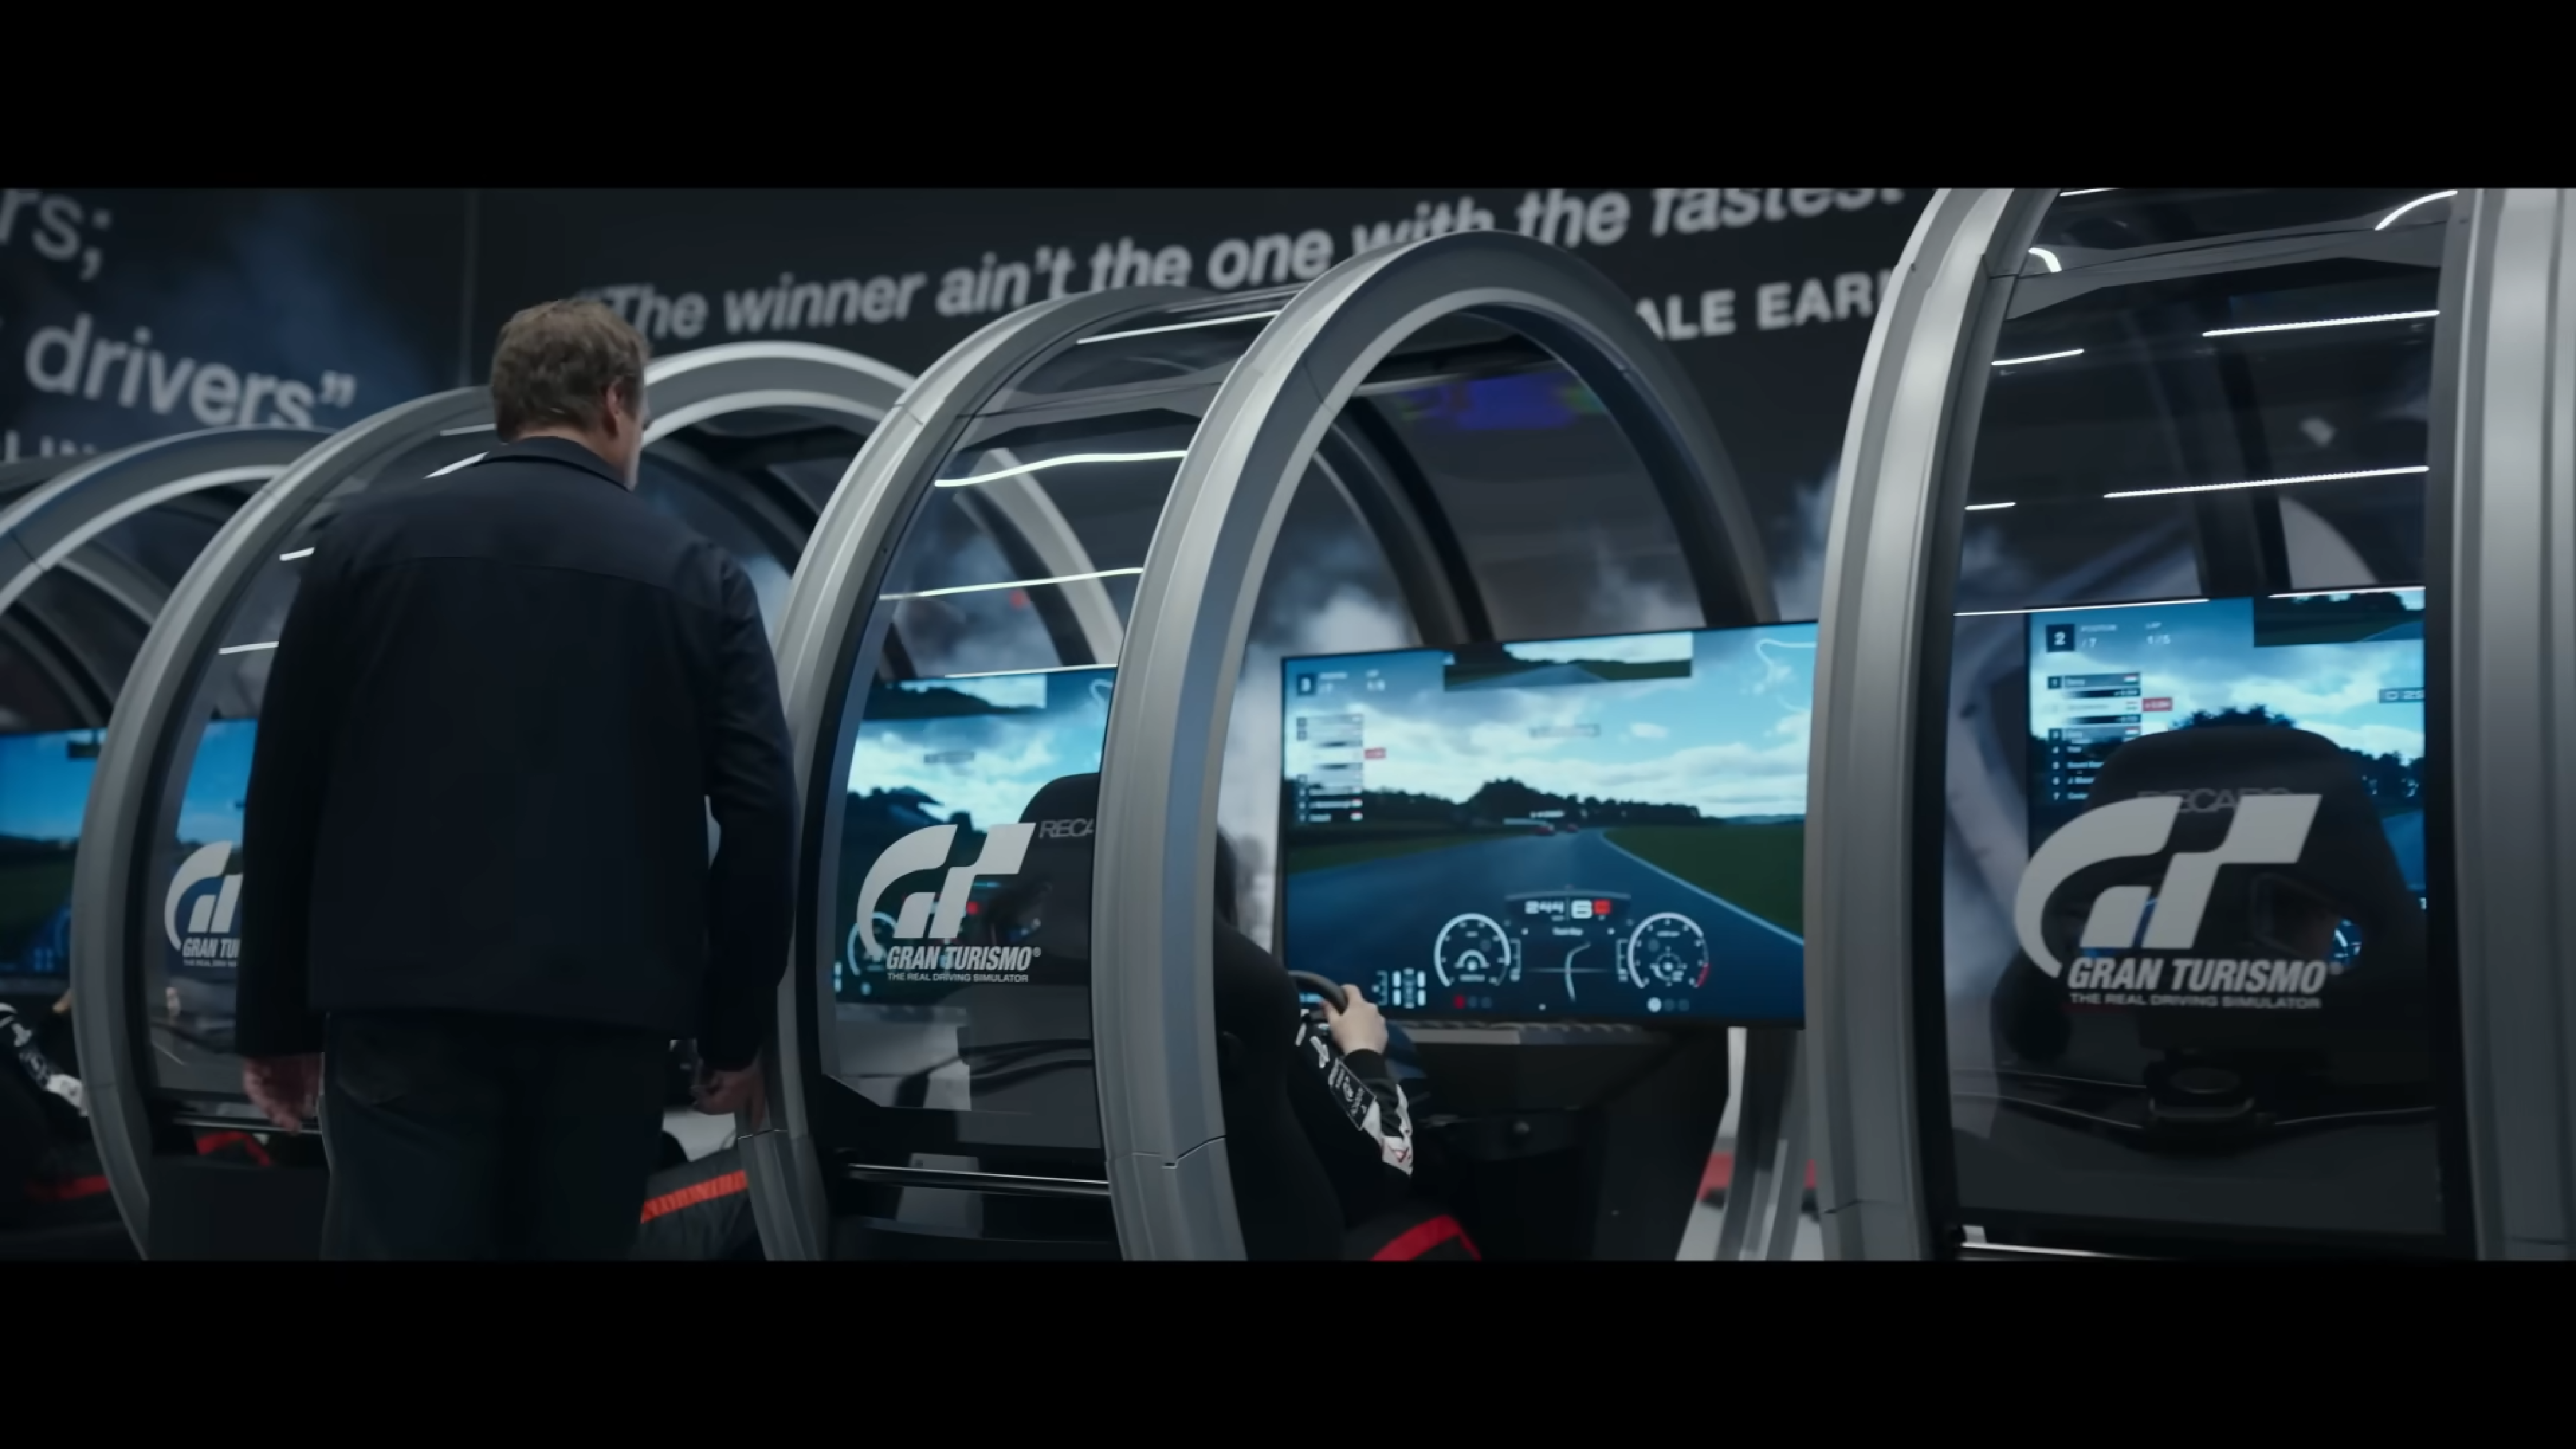 GRAN TURISMO - Official Trailer 2 (HD) 